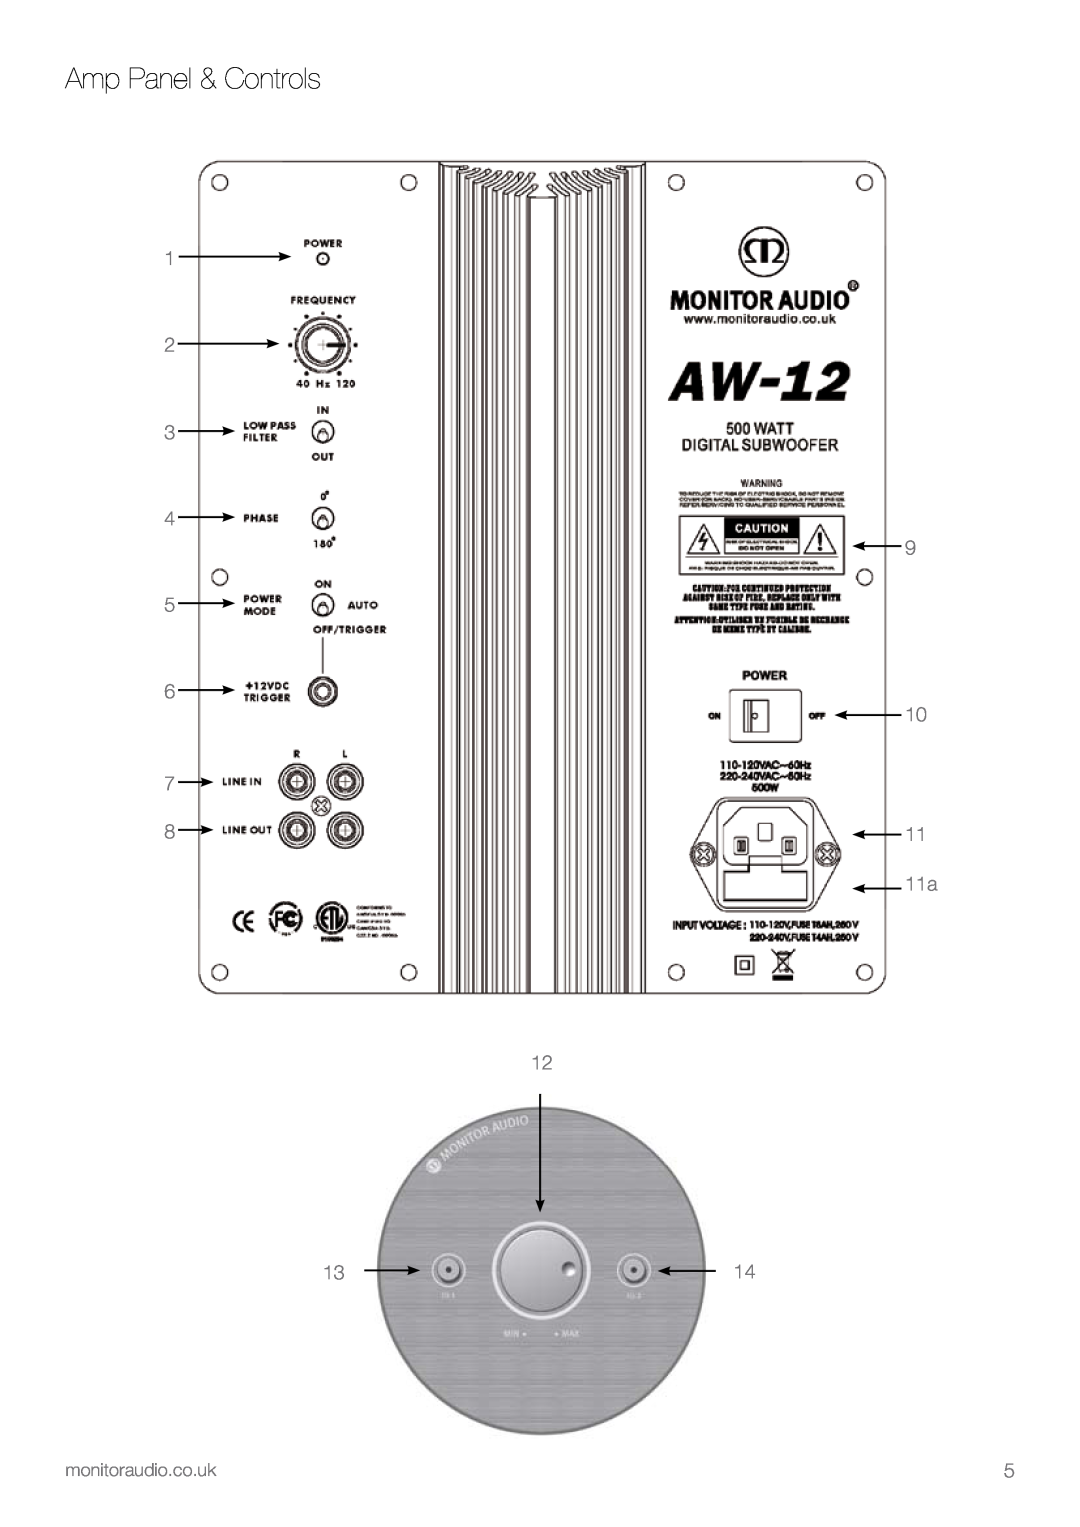 Apex Digital AW-12 owner manual Amp Panel & Controls, 1 2 3 4 9 5 6 10 7 8 11a, monitoraudio.co.uk 